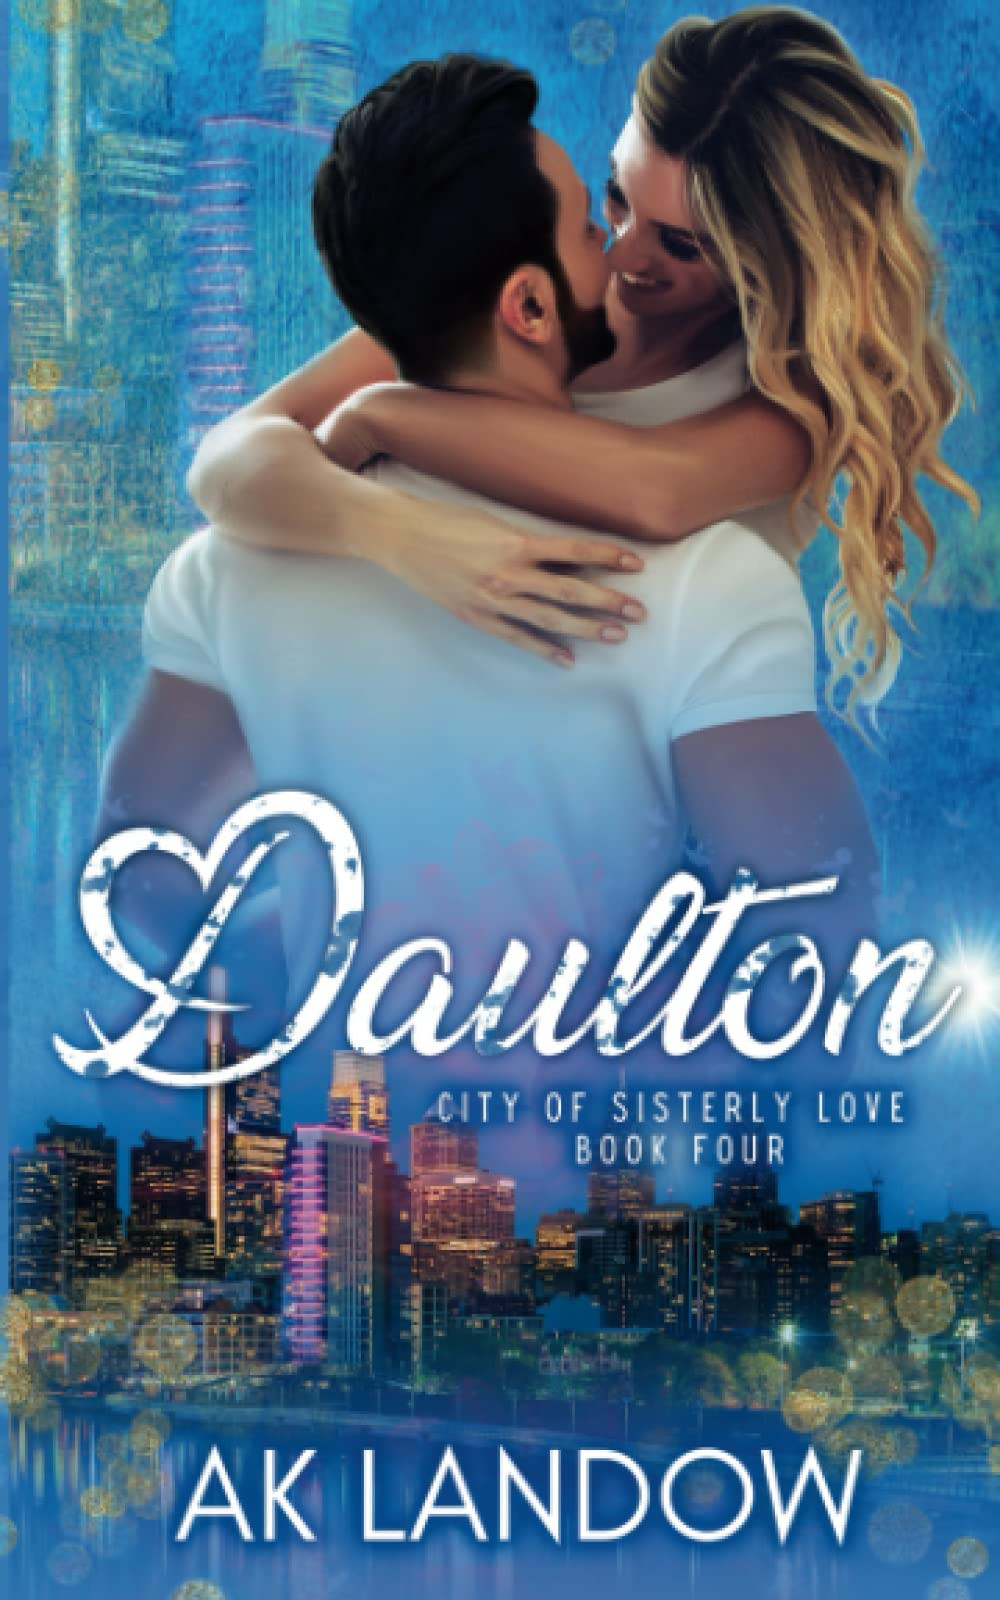 DAULTON: City of Sisterly Love Book 4